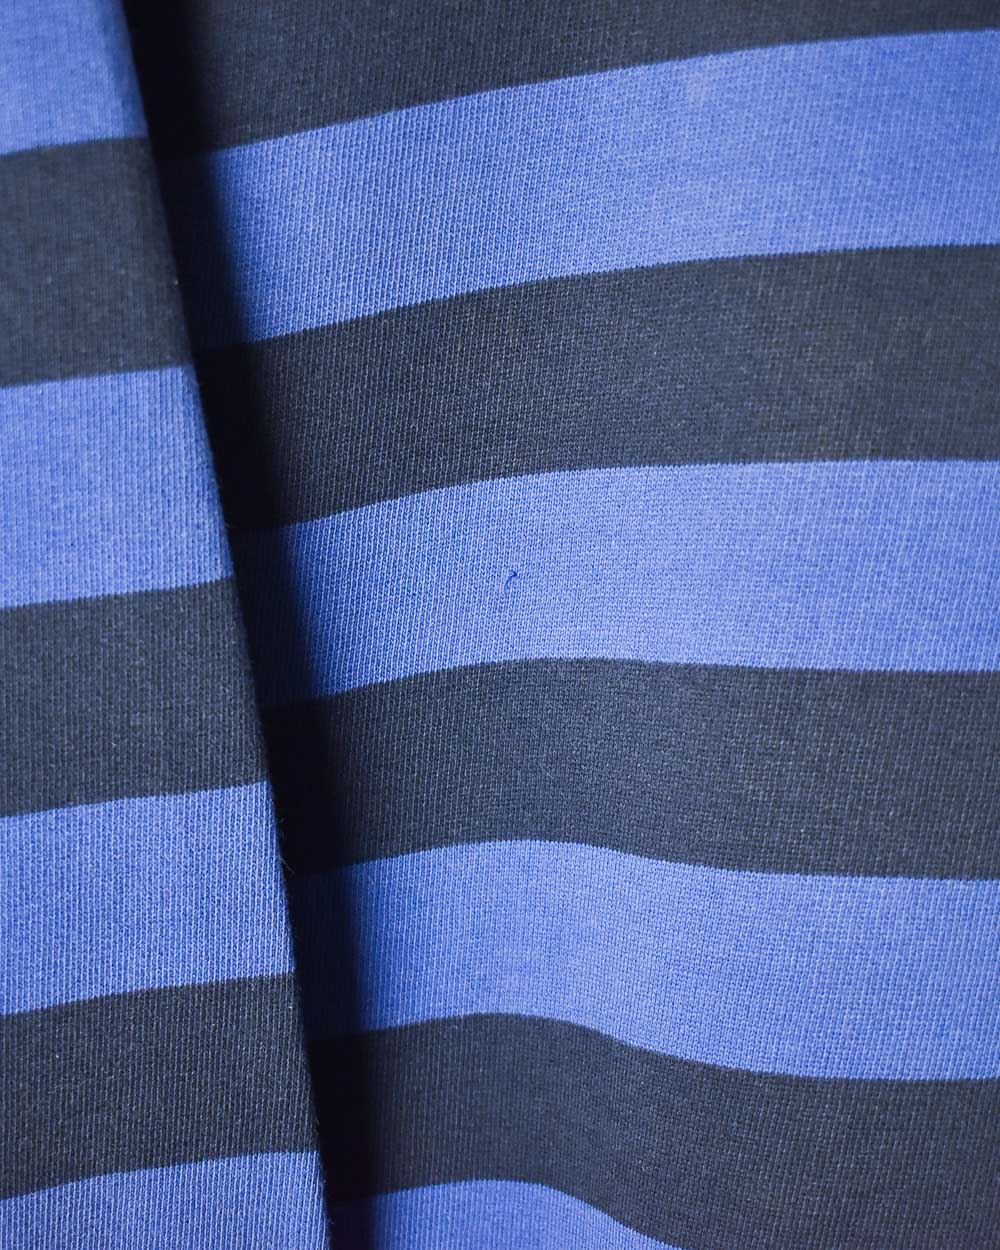 Navy Polo Ralph Lauren Striped Sweatshirt - X-Large